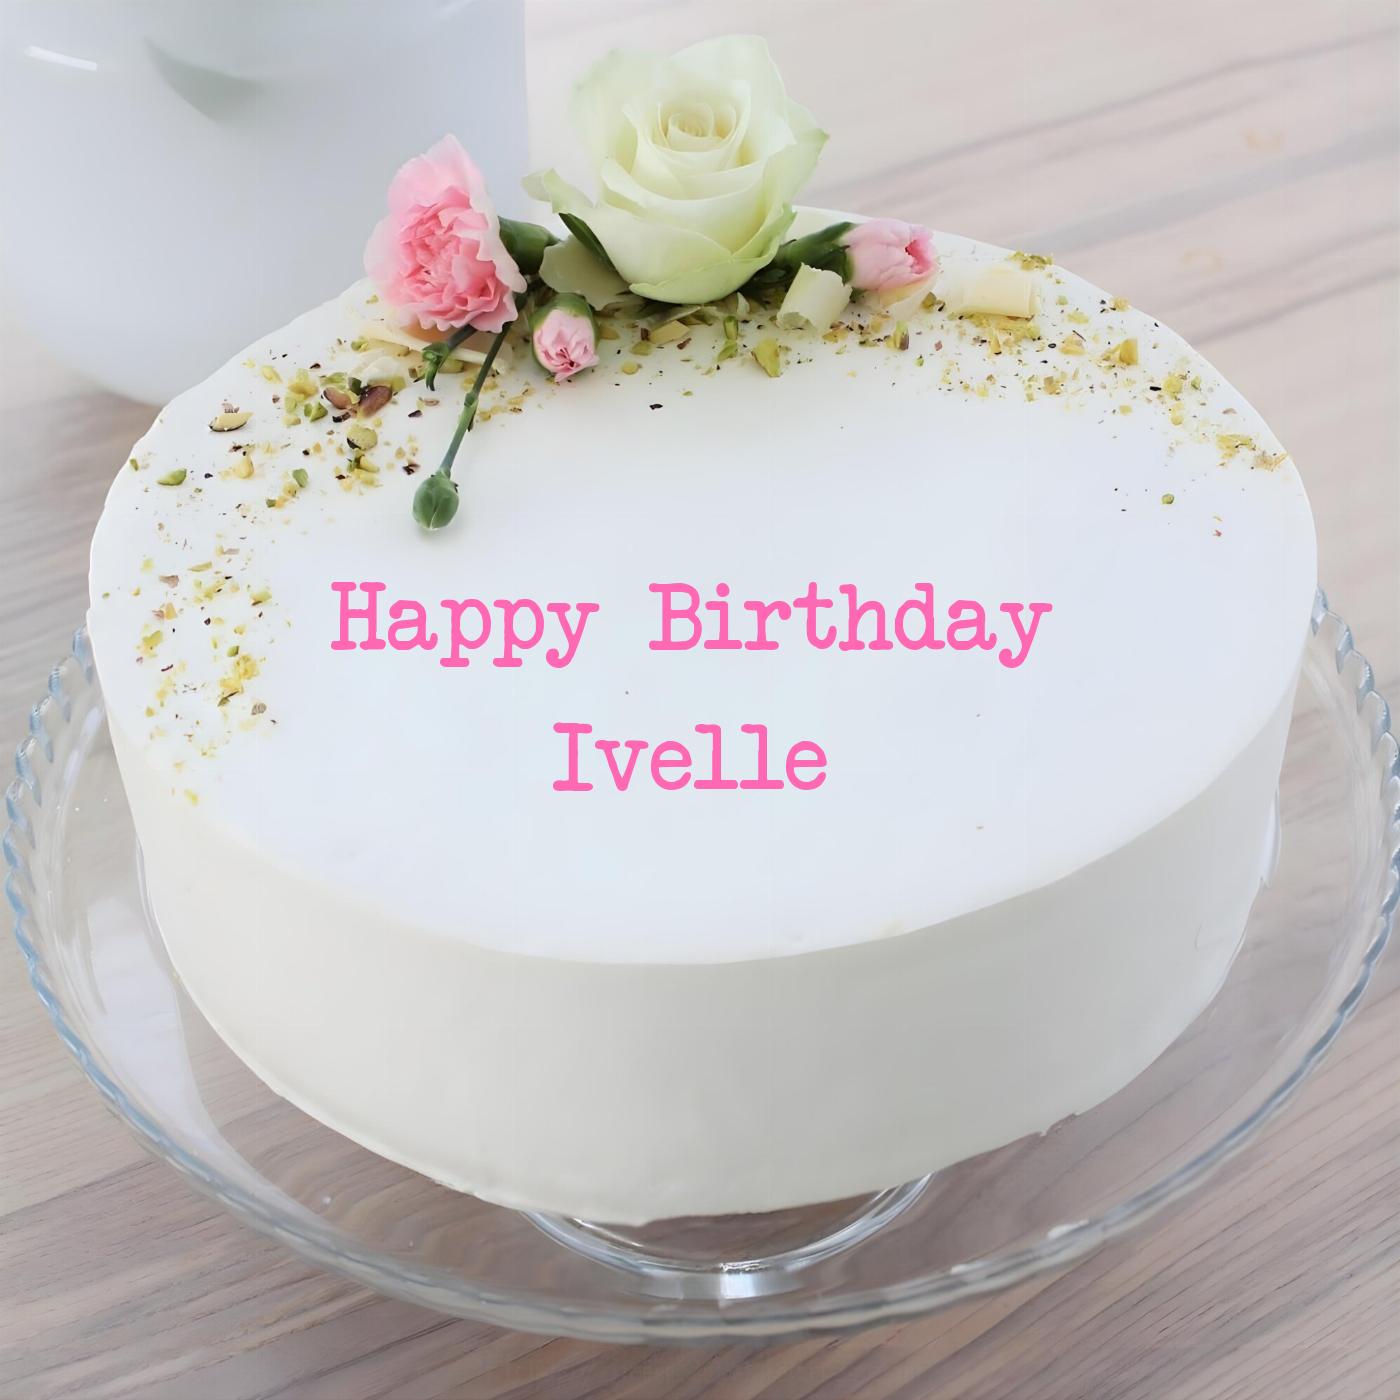 Happy Birthday Ivelle White Pink Roses Cake